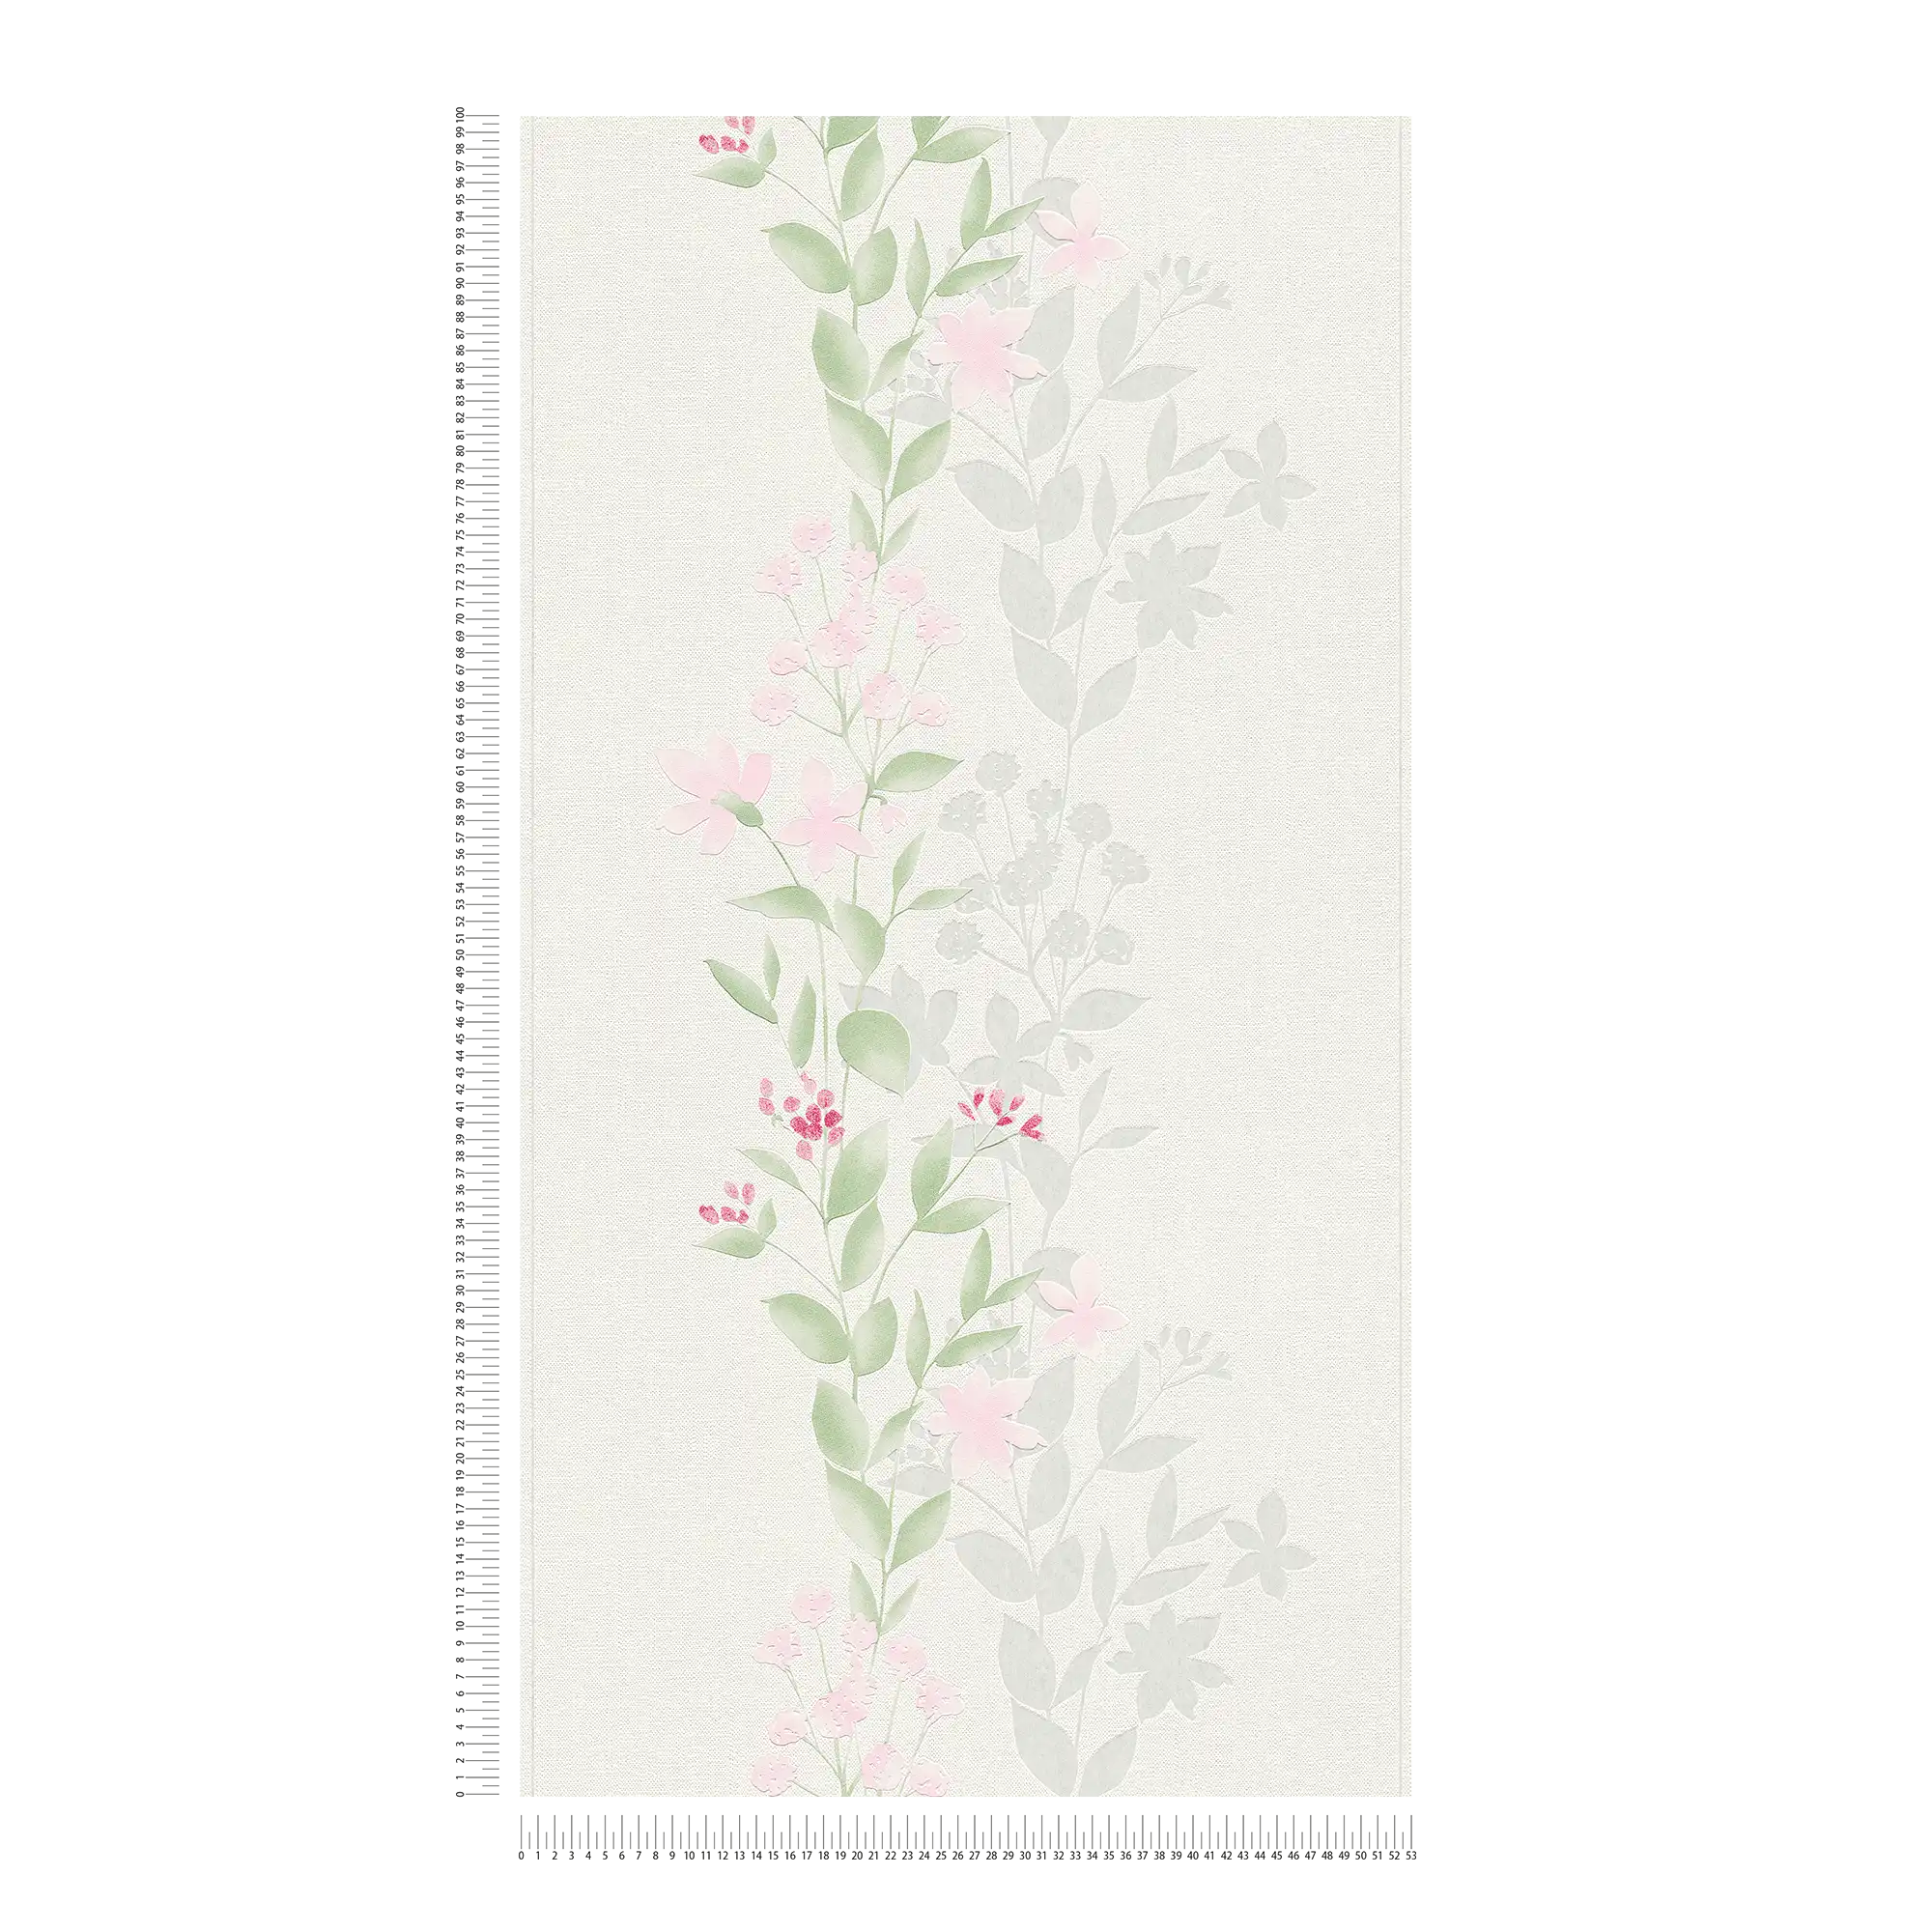             papel pintado motivo floral, efecto acuarela - gris, verde, rosa
        